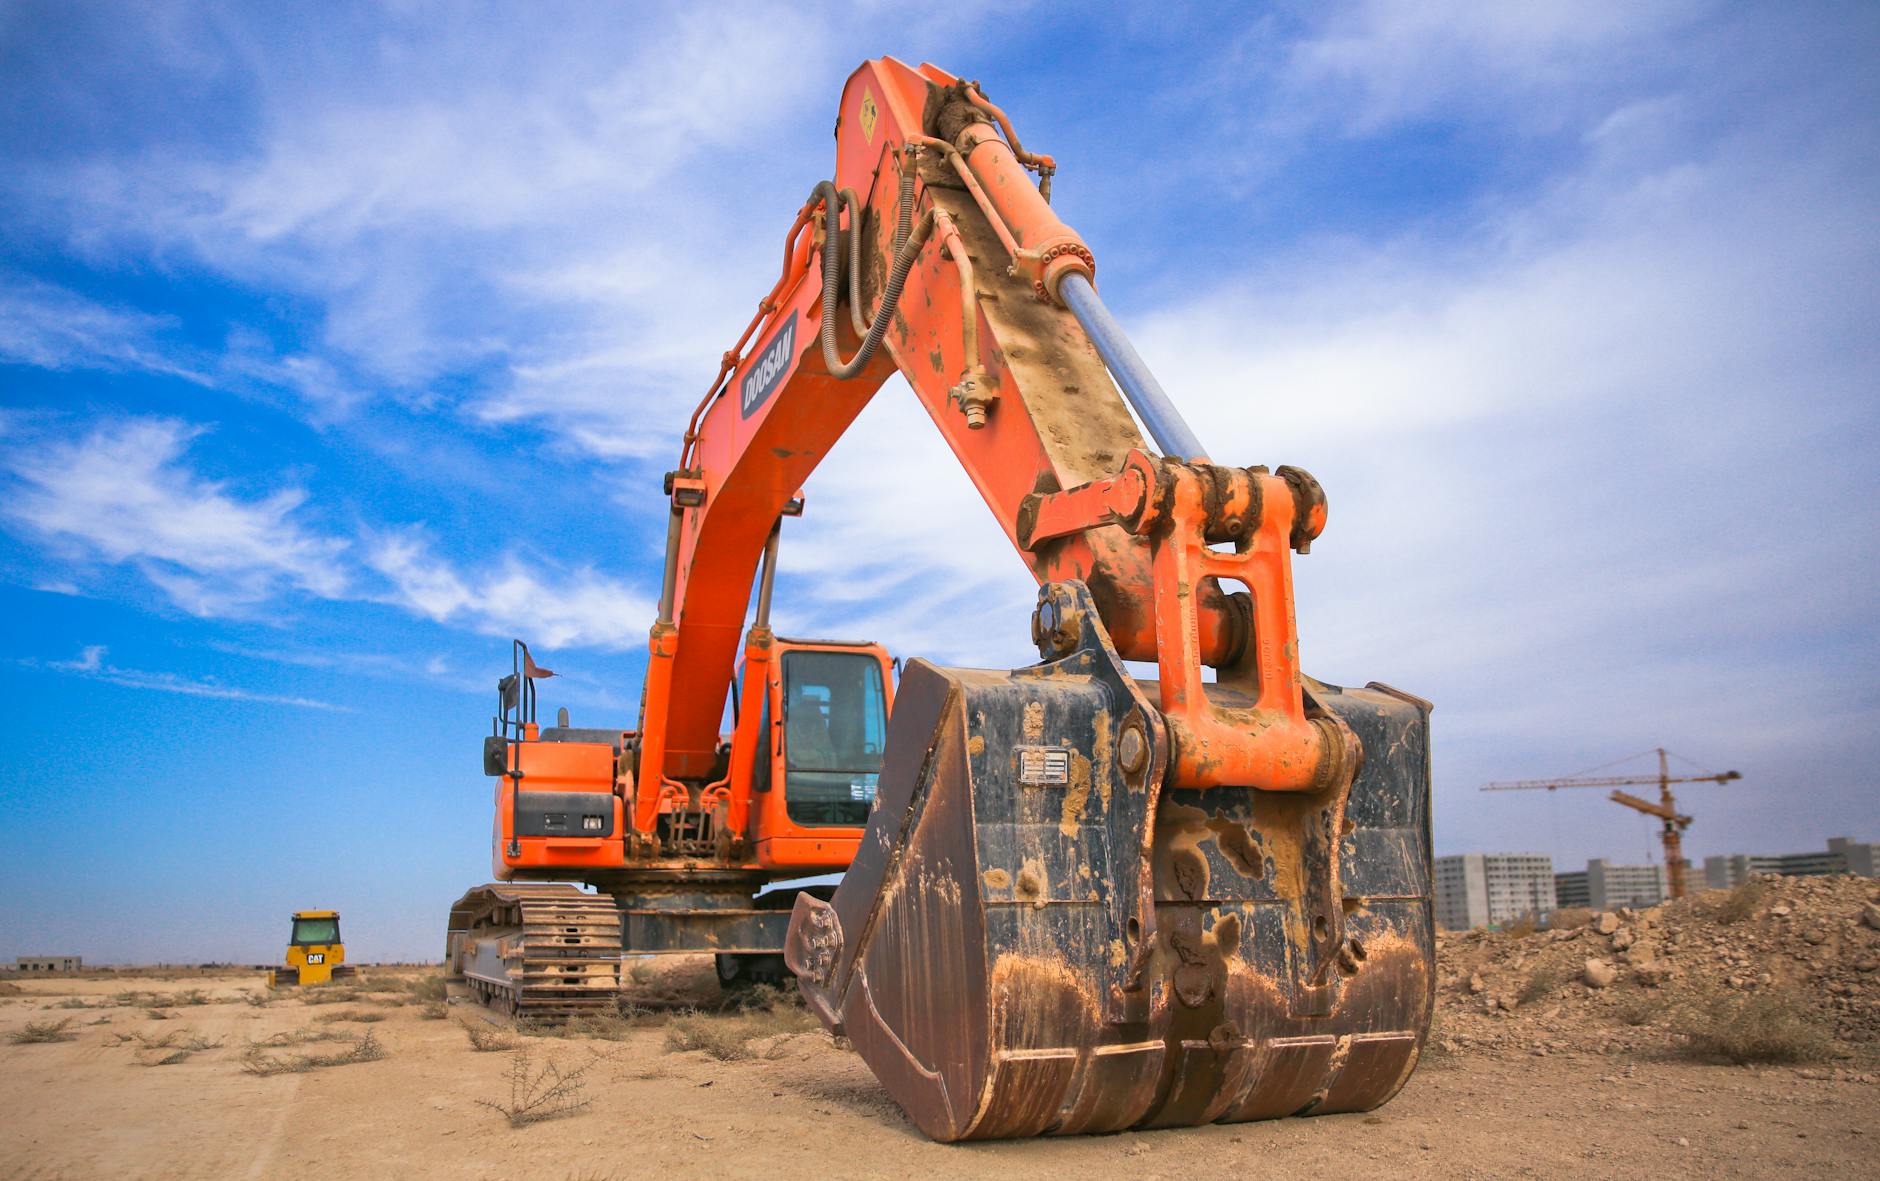 Excavation Safety Ebook: Hazards and Control Measures - Free Download